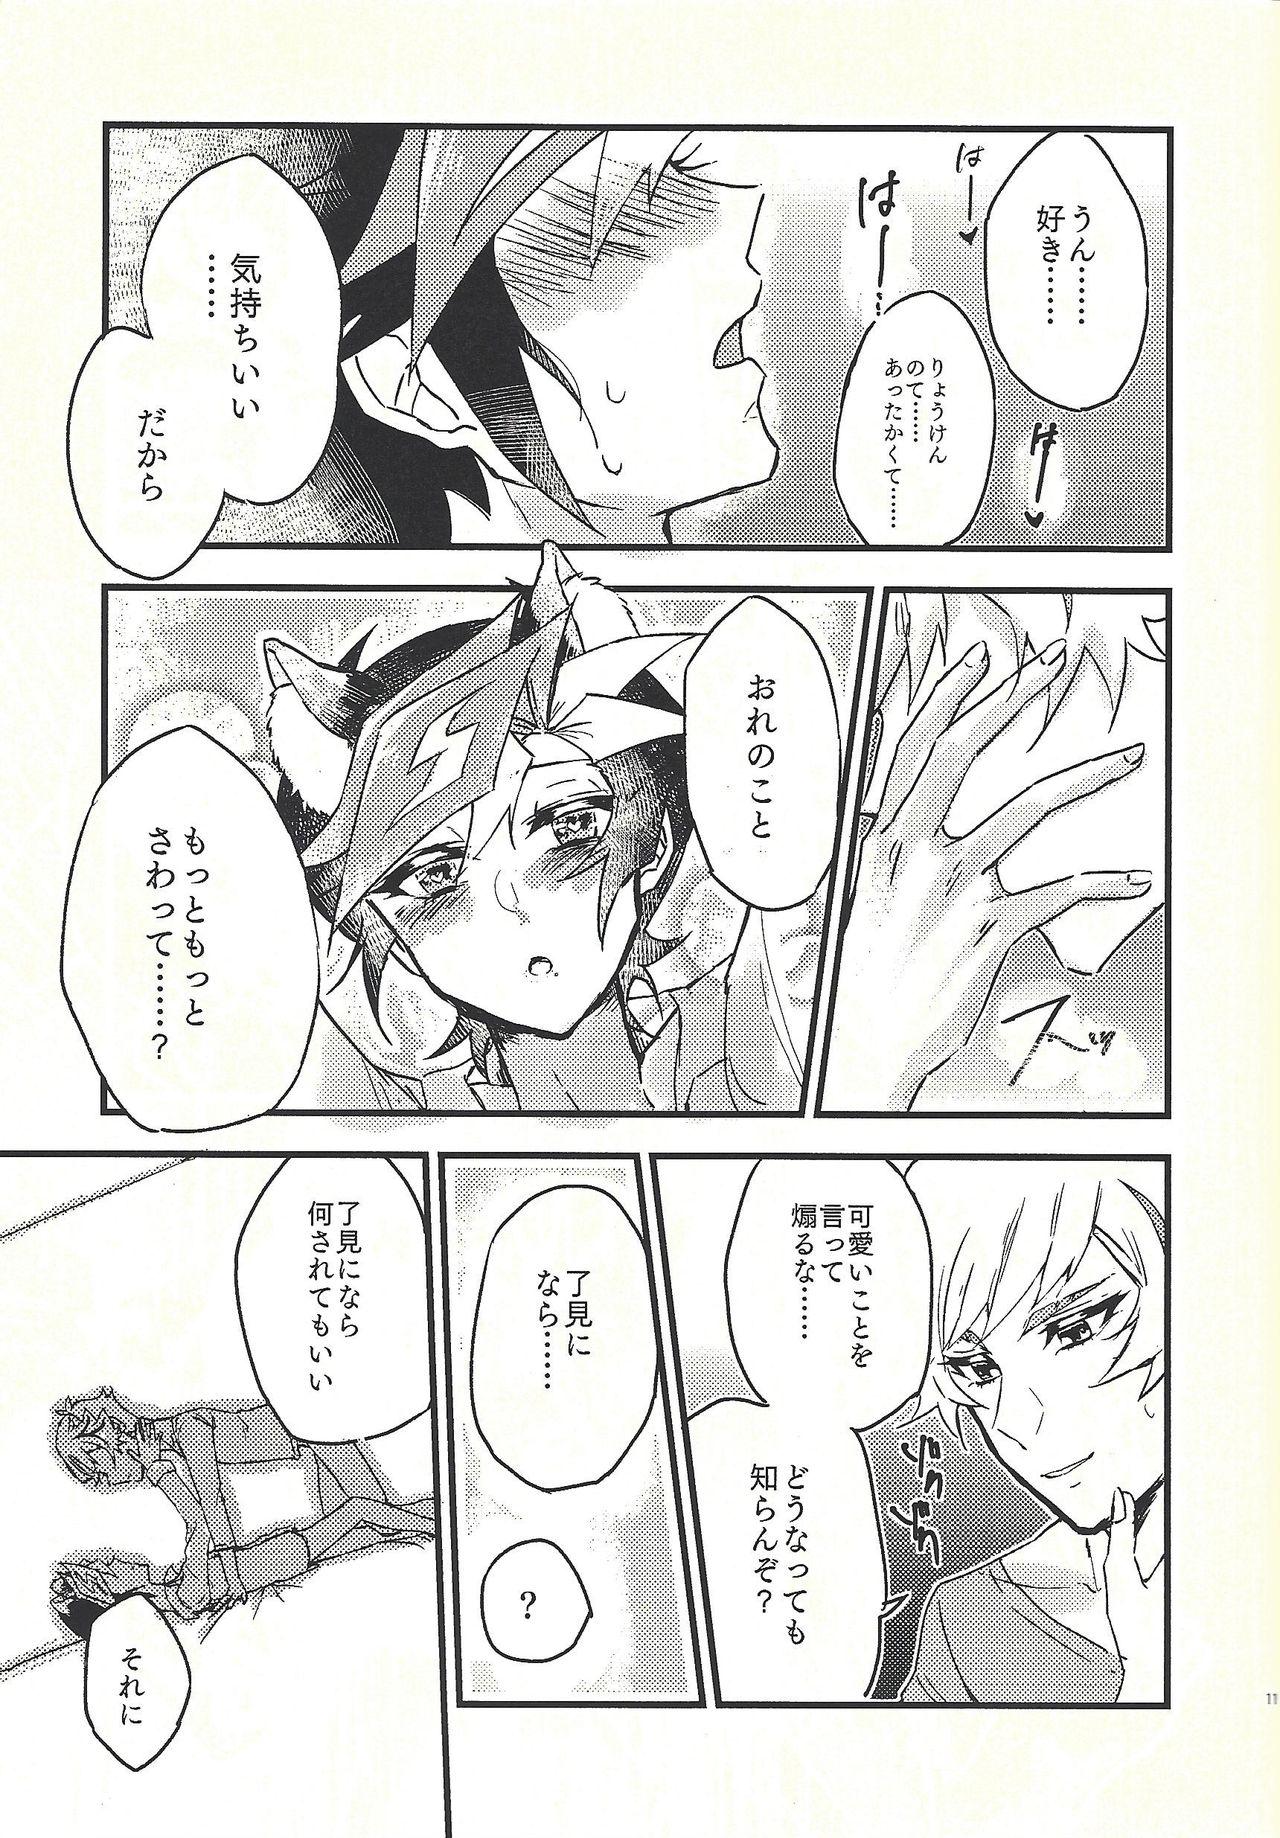 Masturbandose Shūniichido no nyanko-chan. - Yu-gi-oh vrains Gay Group - Page 10